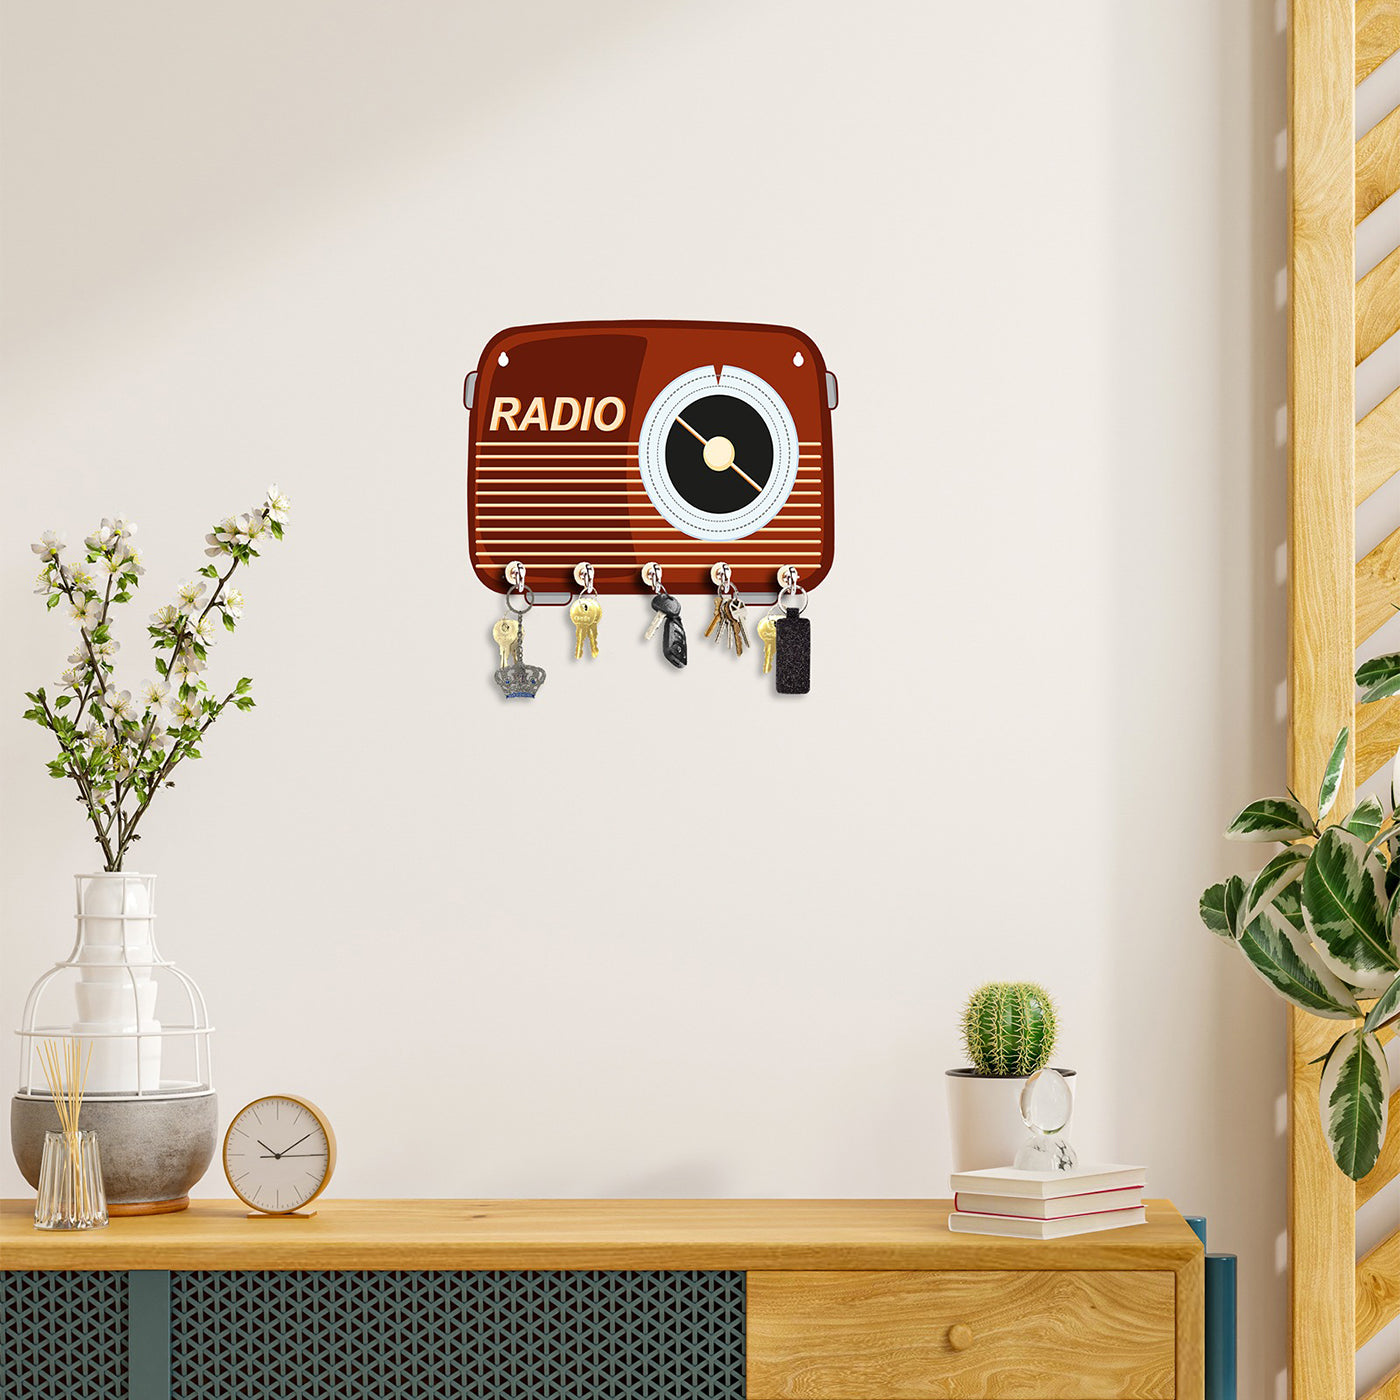 5 Hook radio design key holder | wall decor | home decor | retro key holder design